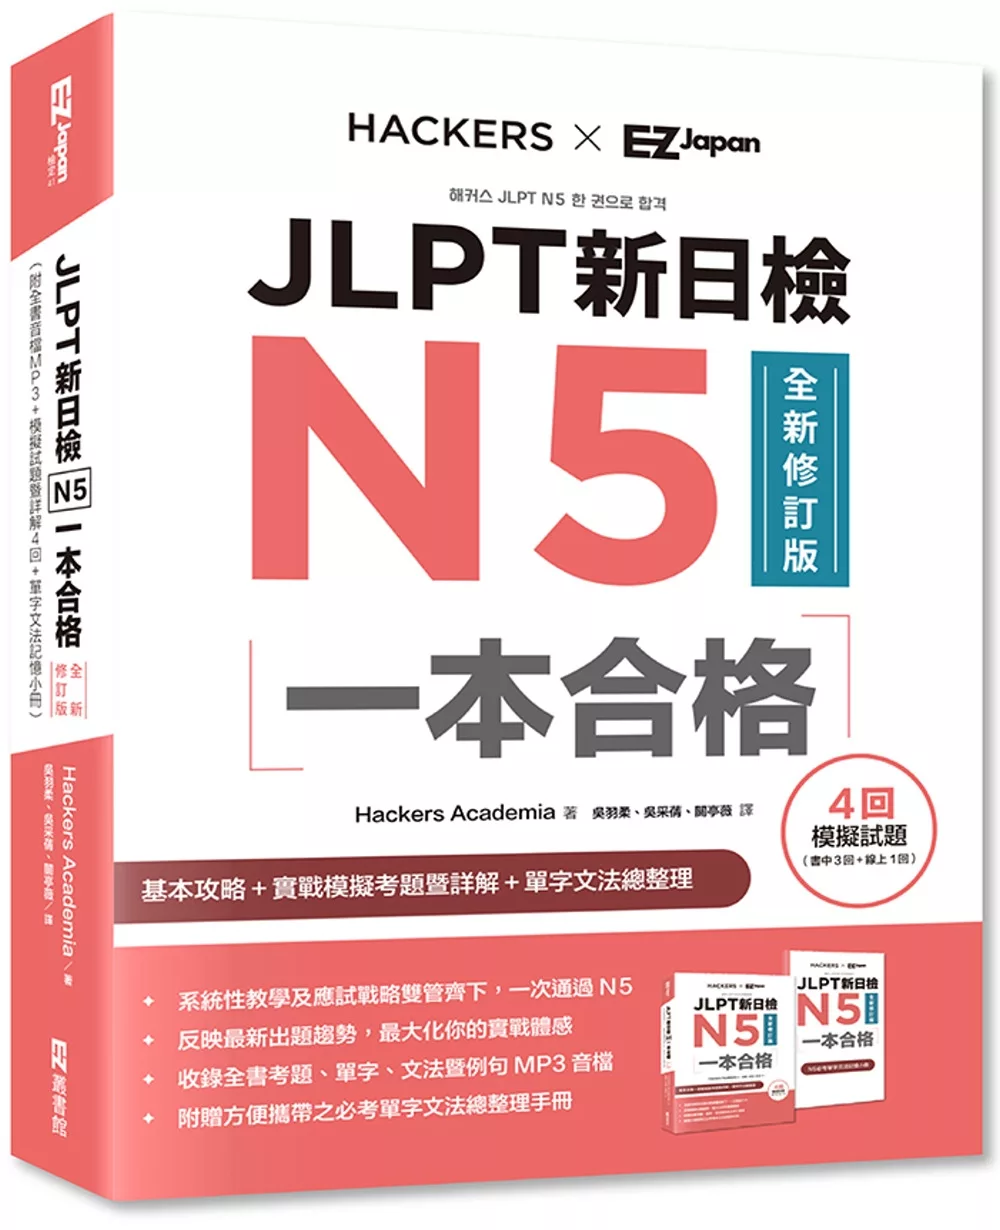 JLPT新日檢N5一本合格全新修訂版